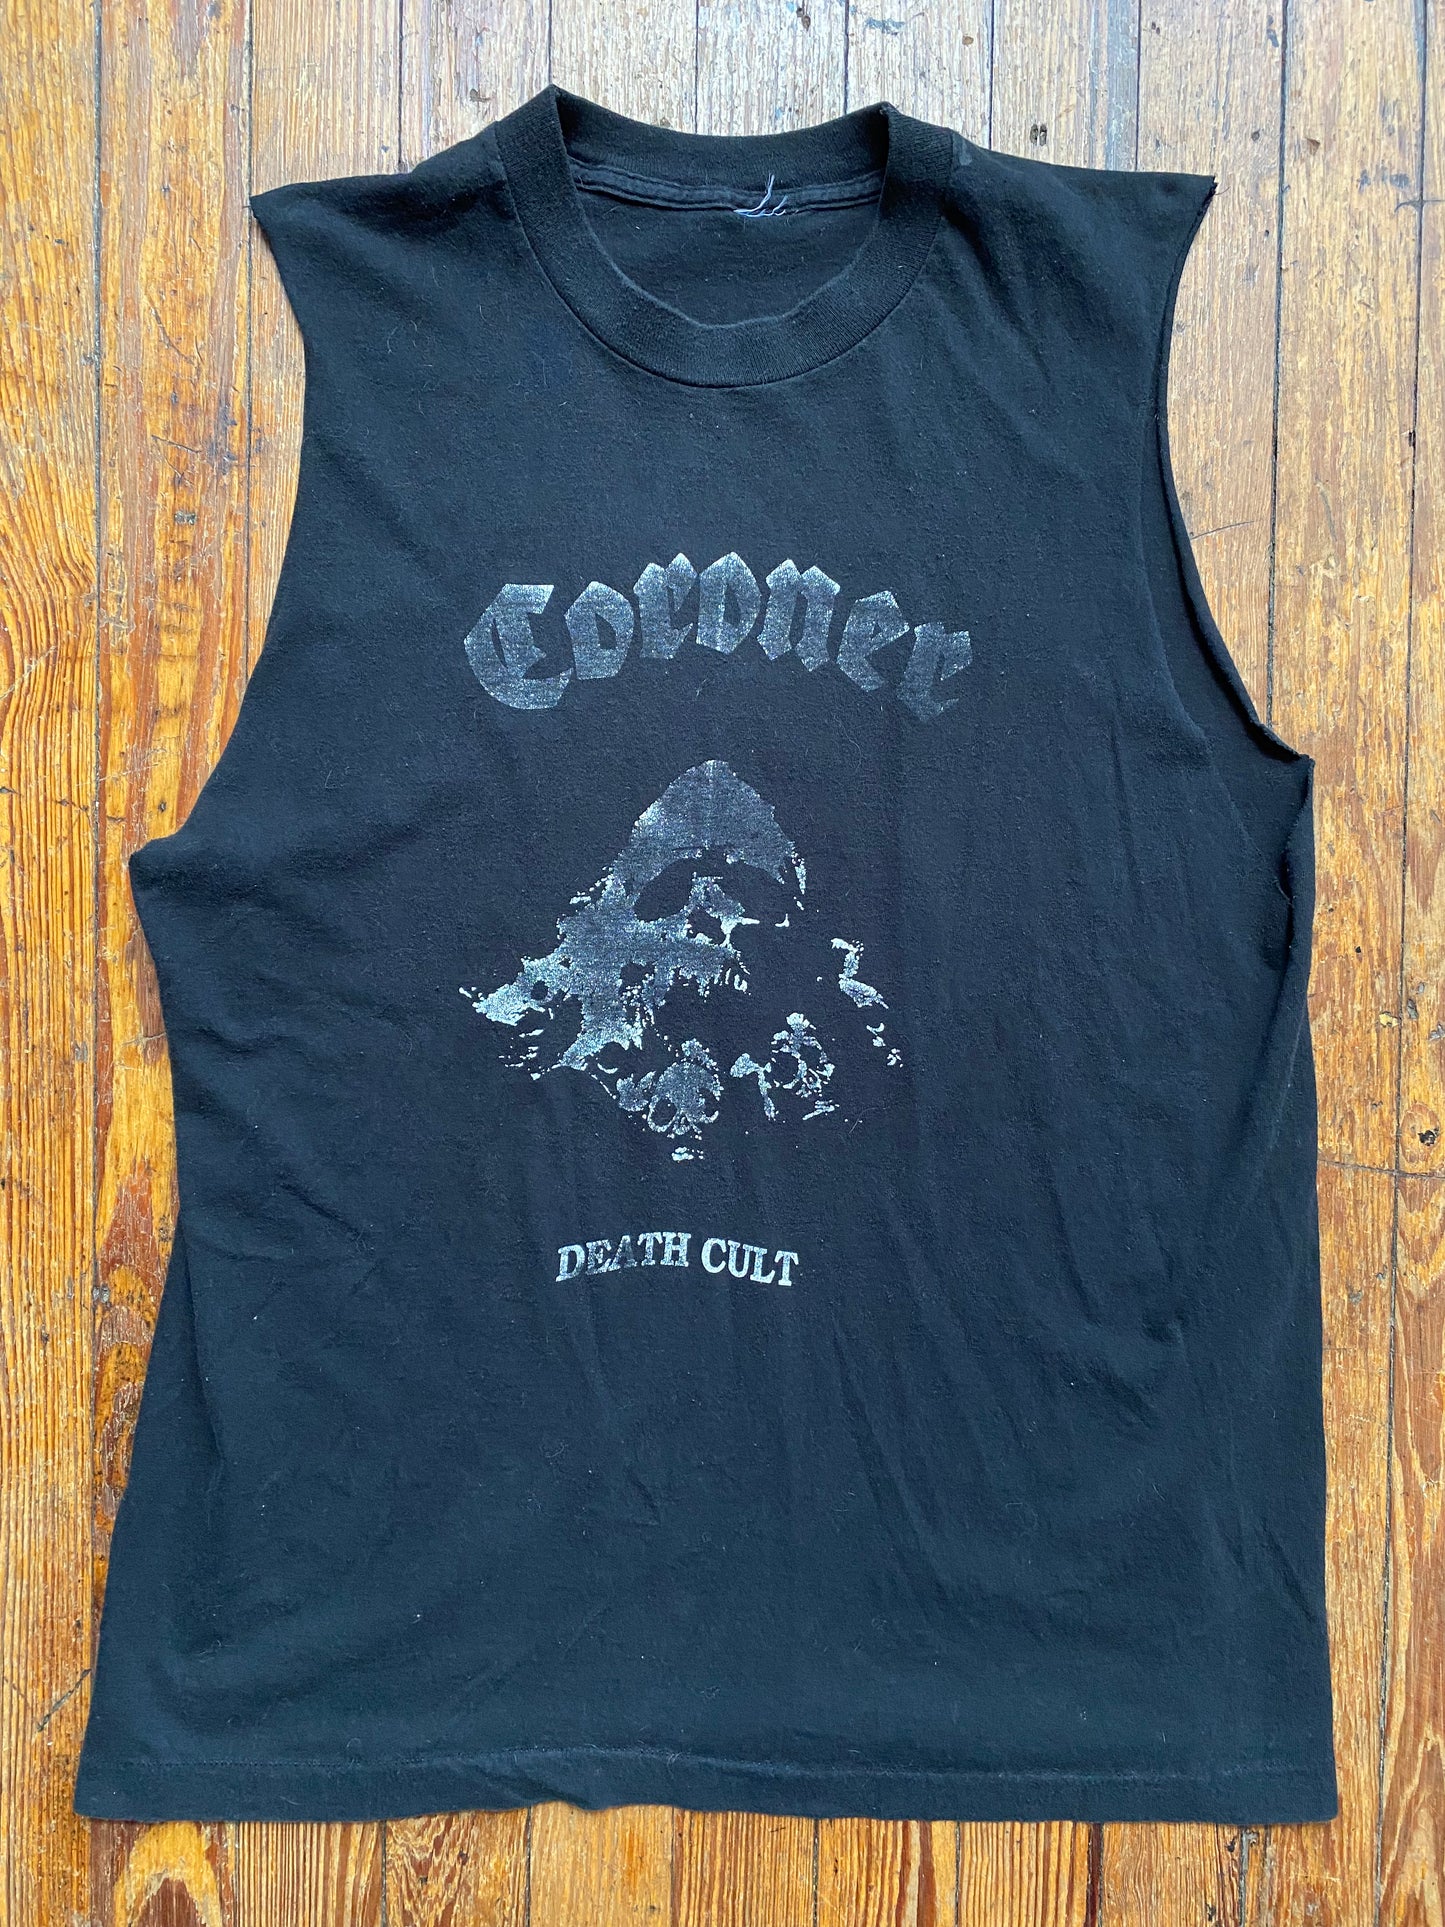 Coroner “Death Cult” Cut Off Shirt